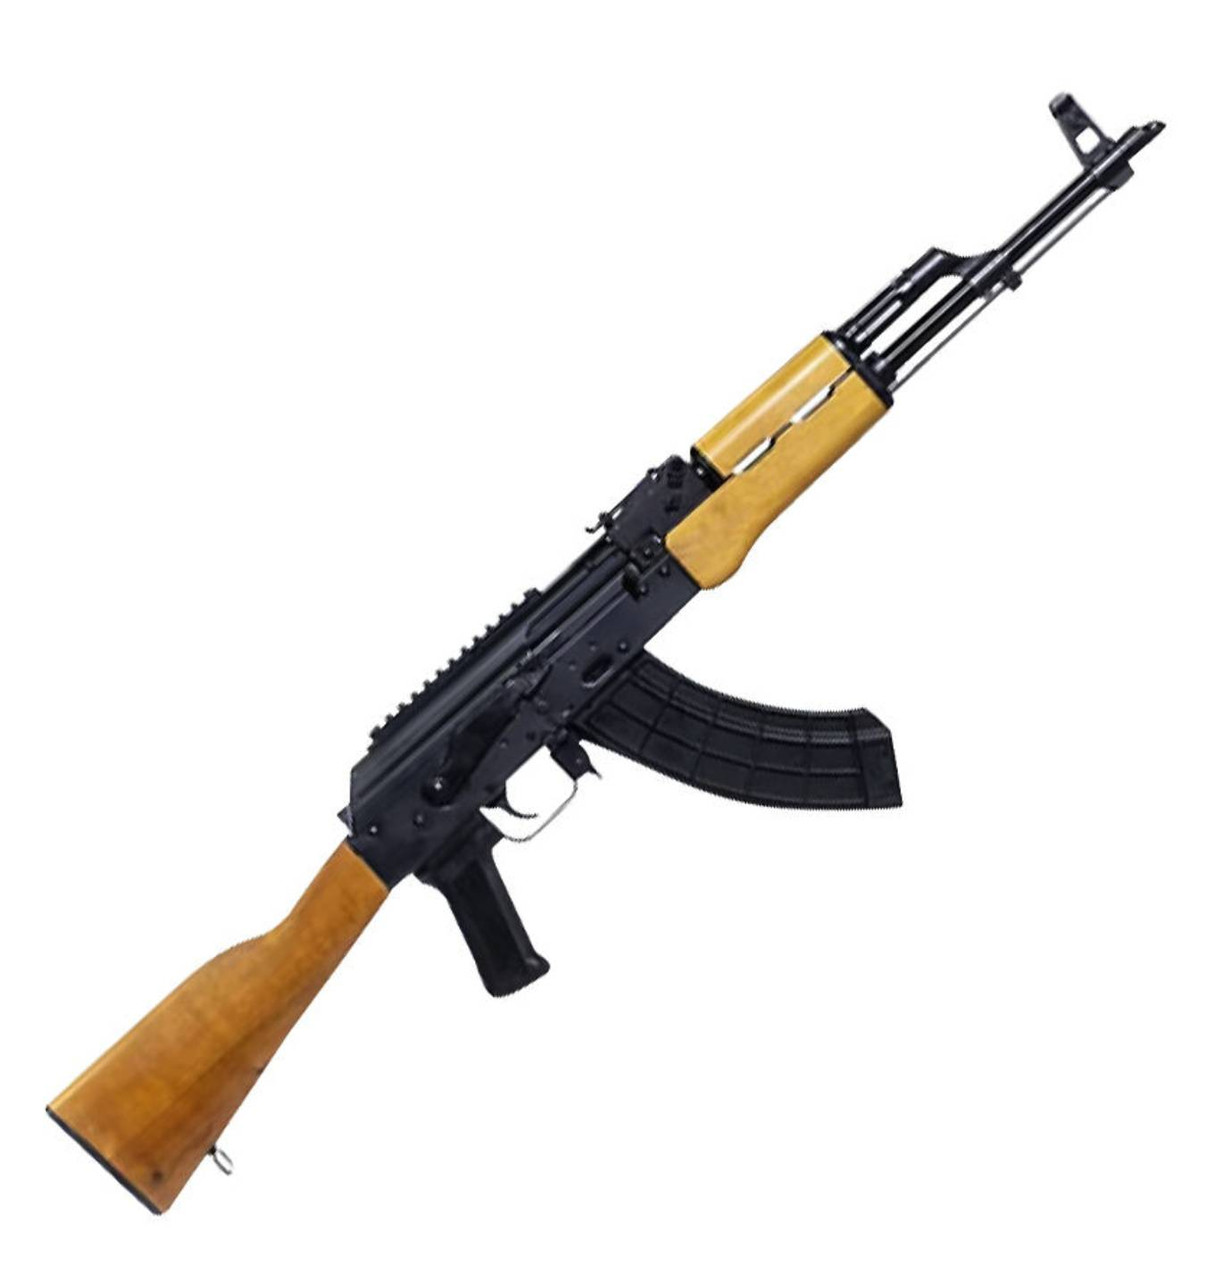 Nova Modul CGR AK-47 7.62x39mm AKM Style Hardwood Stock. Certified